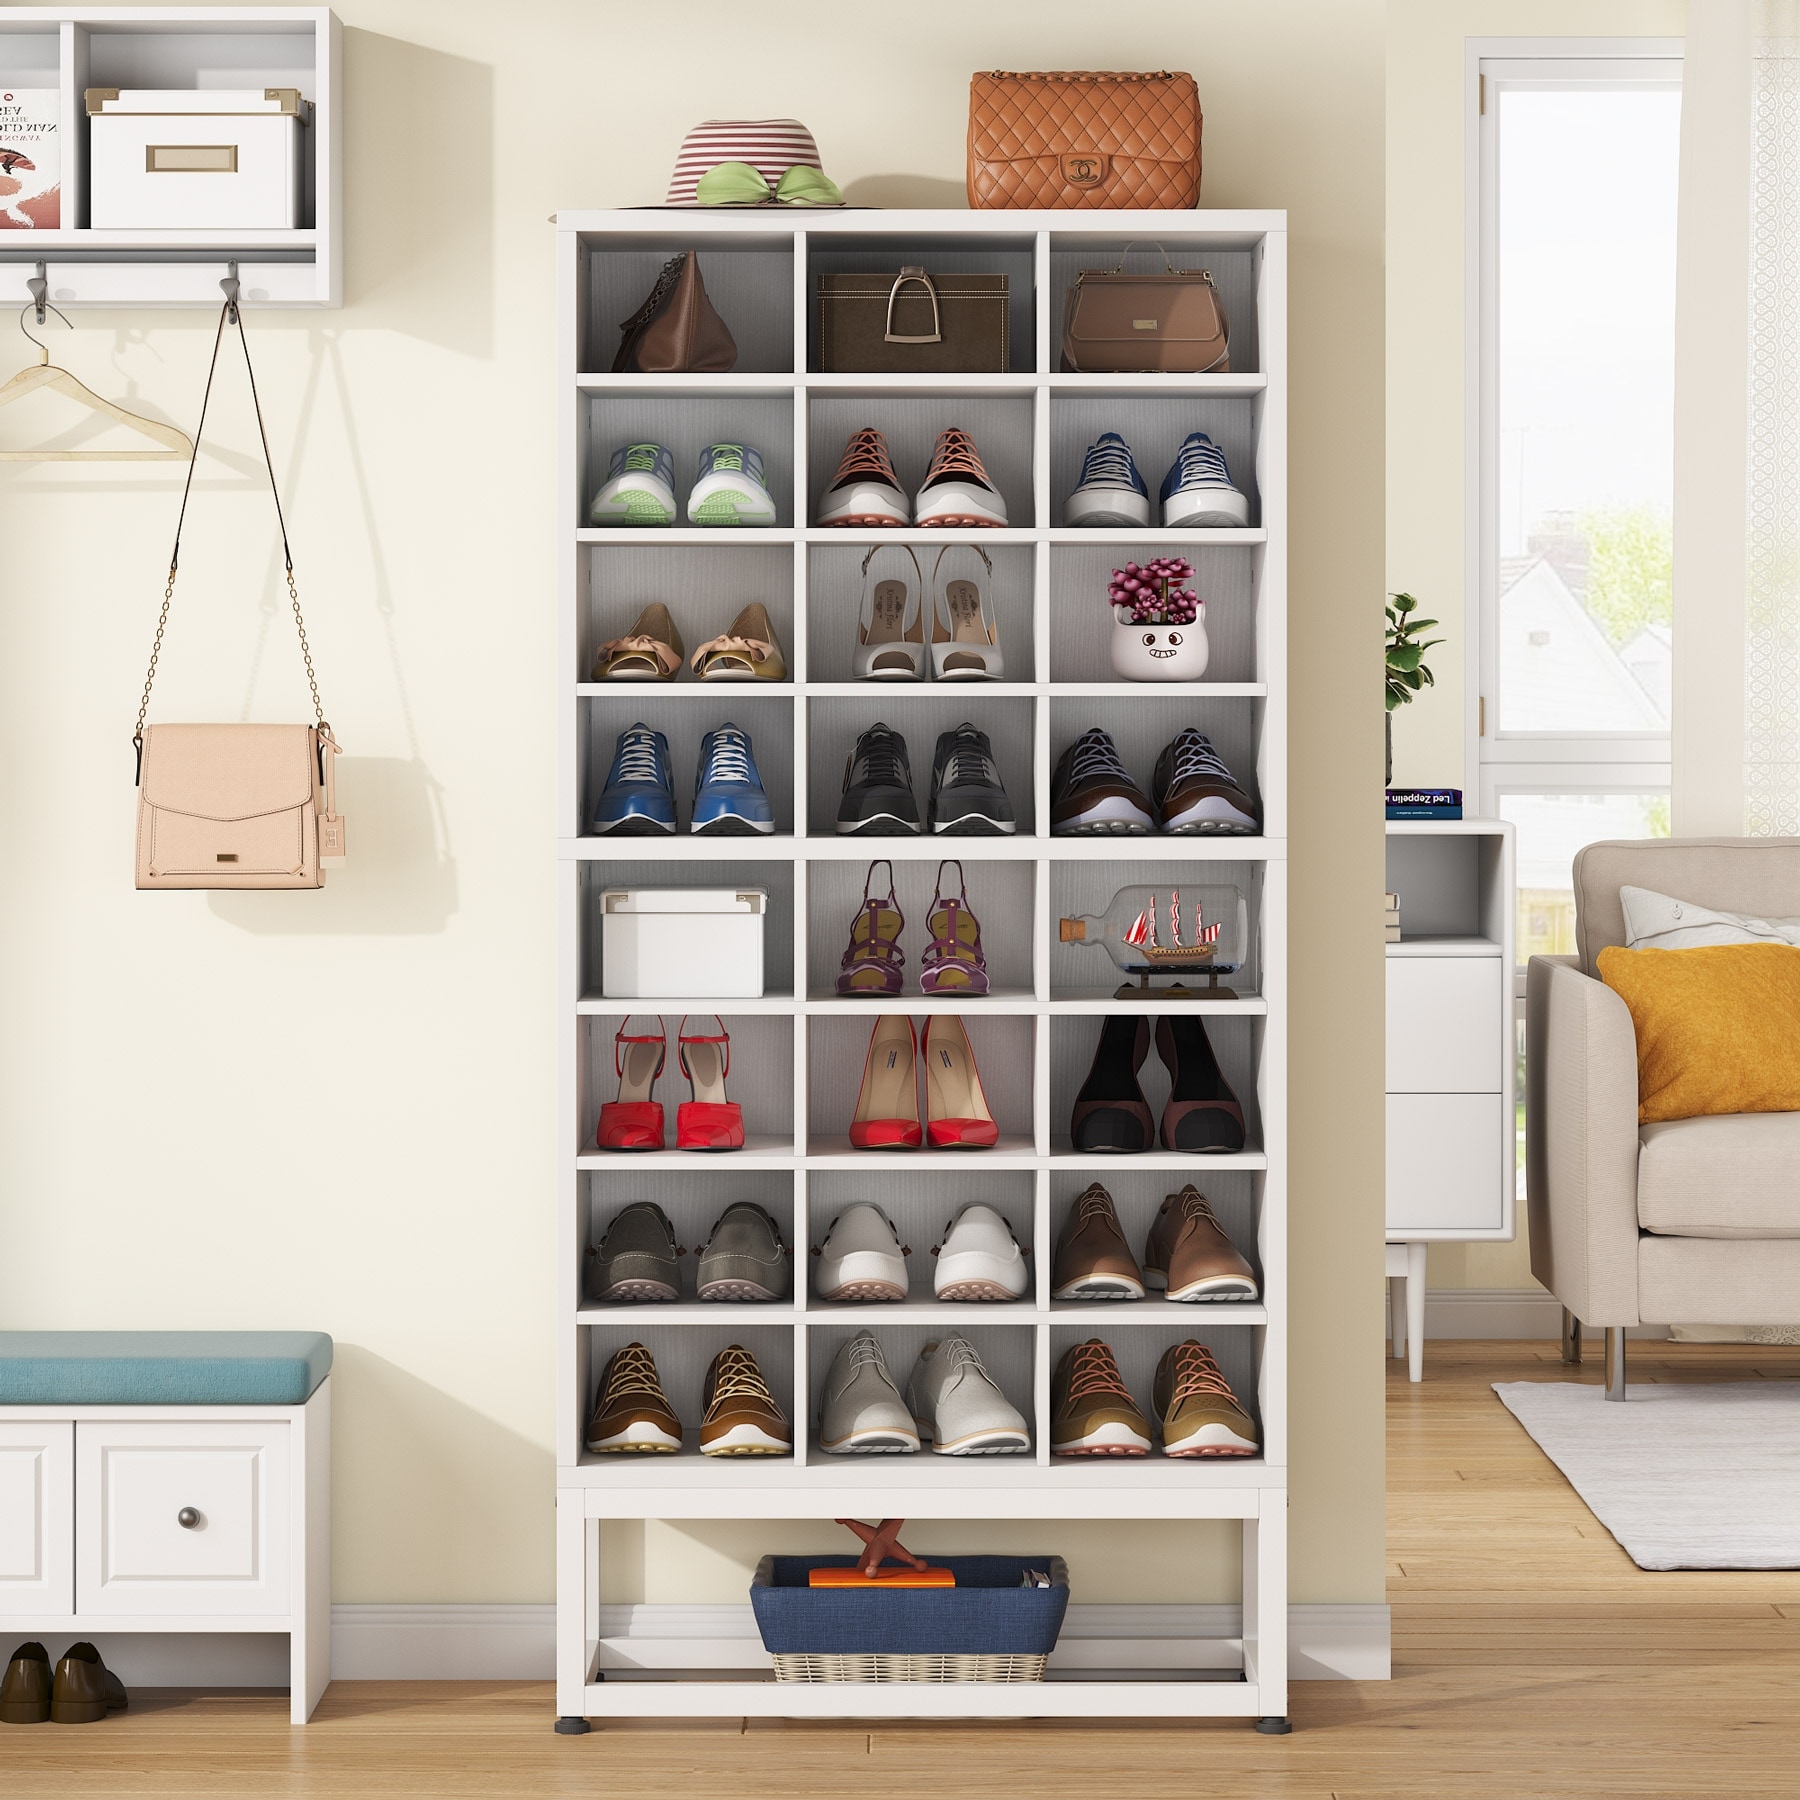 https://ak1.ostkcdn.com/images/products/is/images/direct/710b0afa2defc26436509ecc463e4269df0c597f/White-24-Pair-Shoe-Storage-Cabinet%2C-8-Tier-Feestanding-Cube-Shoe-Rack-Closet-Organizers-for-Bedroom%2C-Hallway.jpg